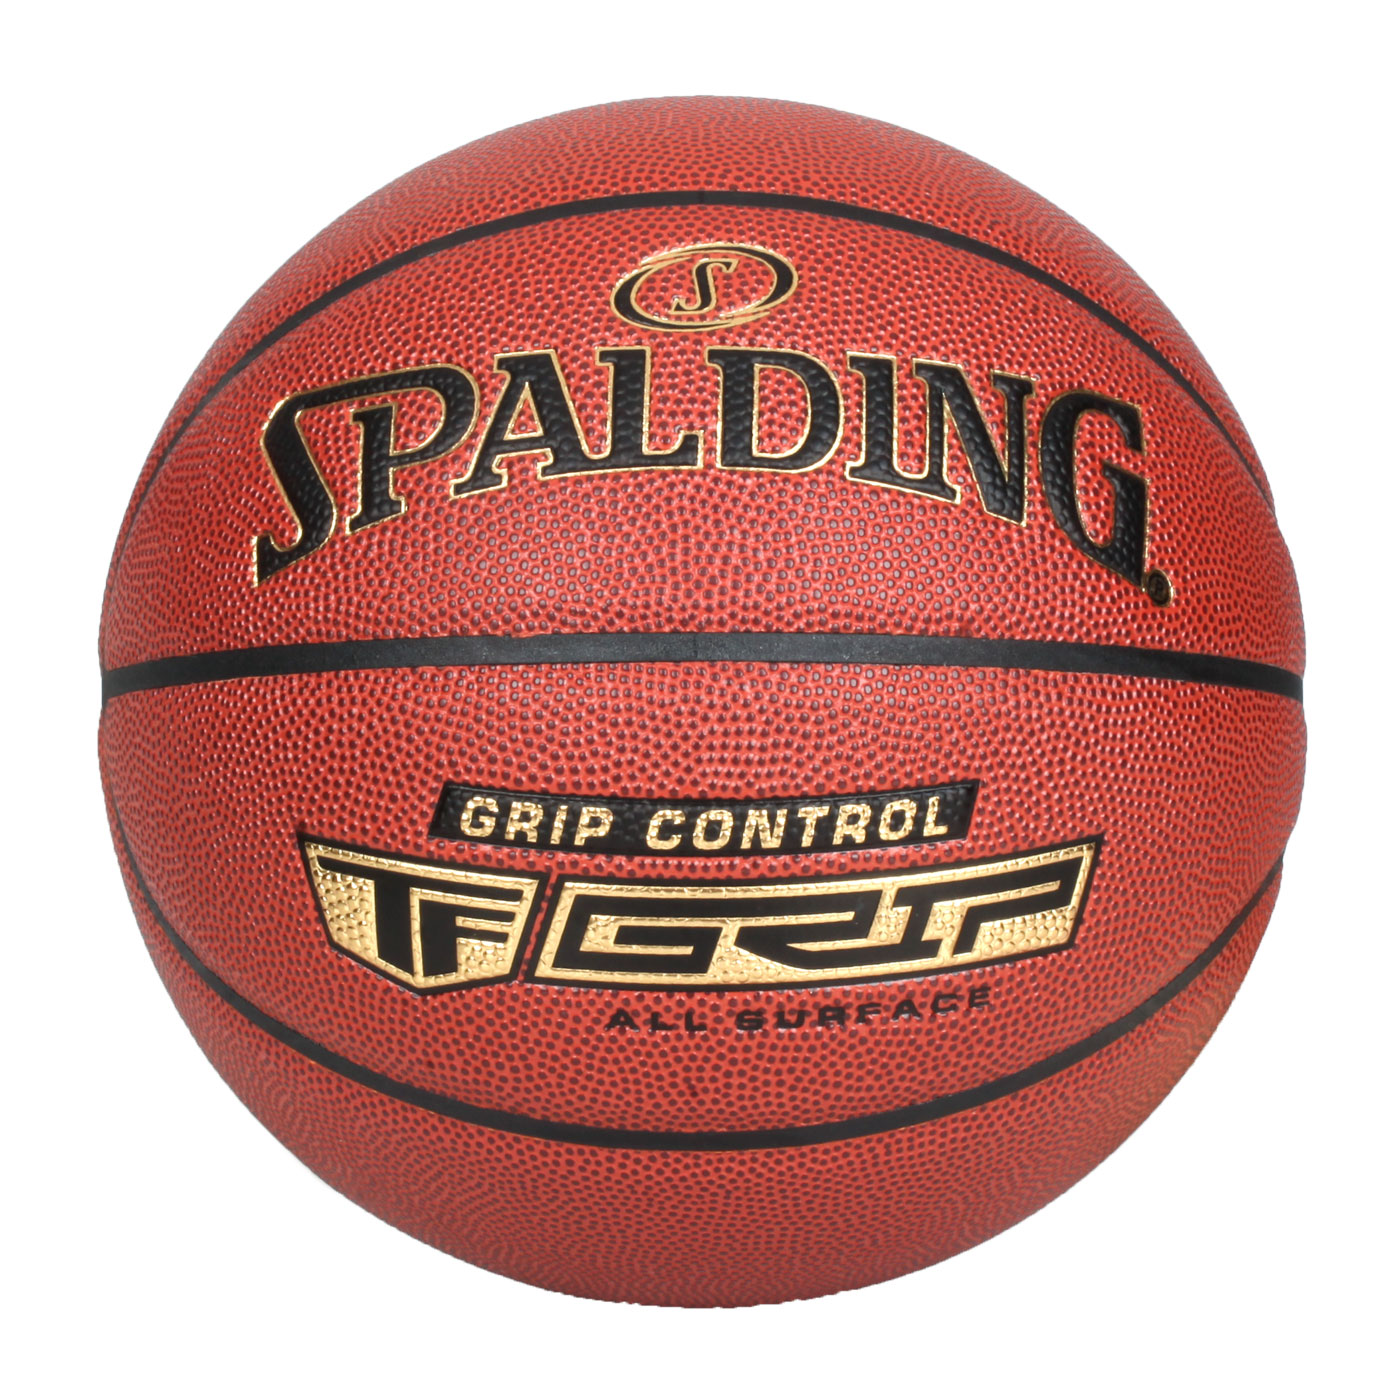 SPALDING 21' Grip Control #7合成皮籃球#40545 SPA76875 - 深棕黑金